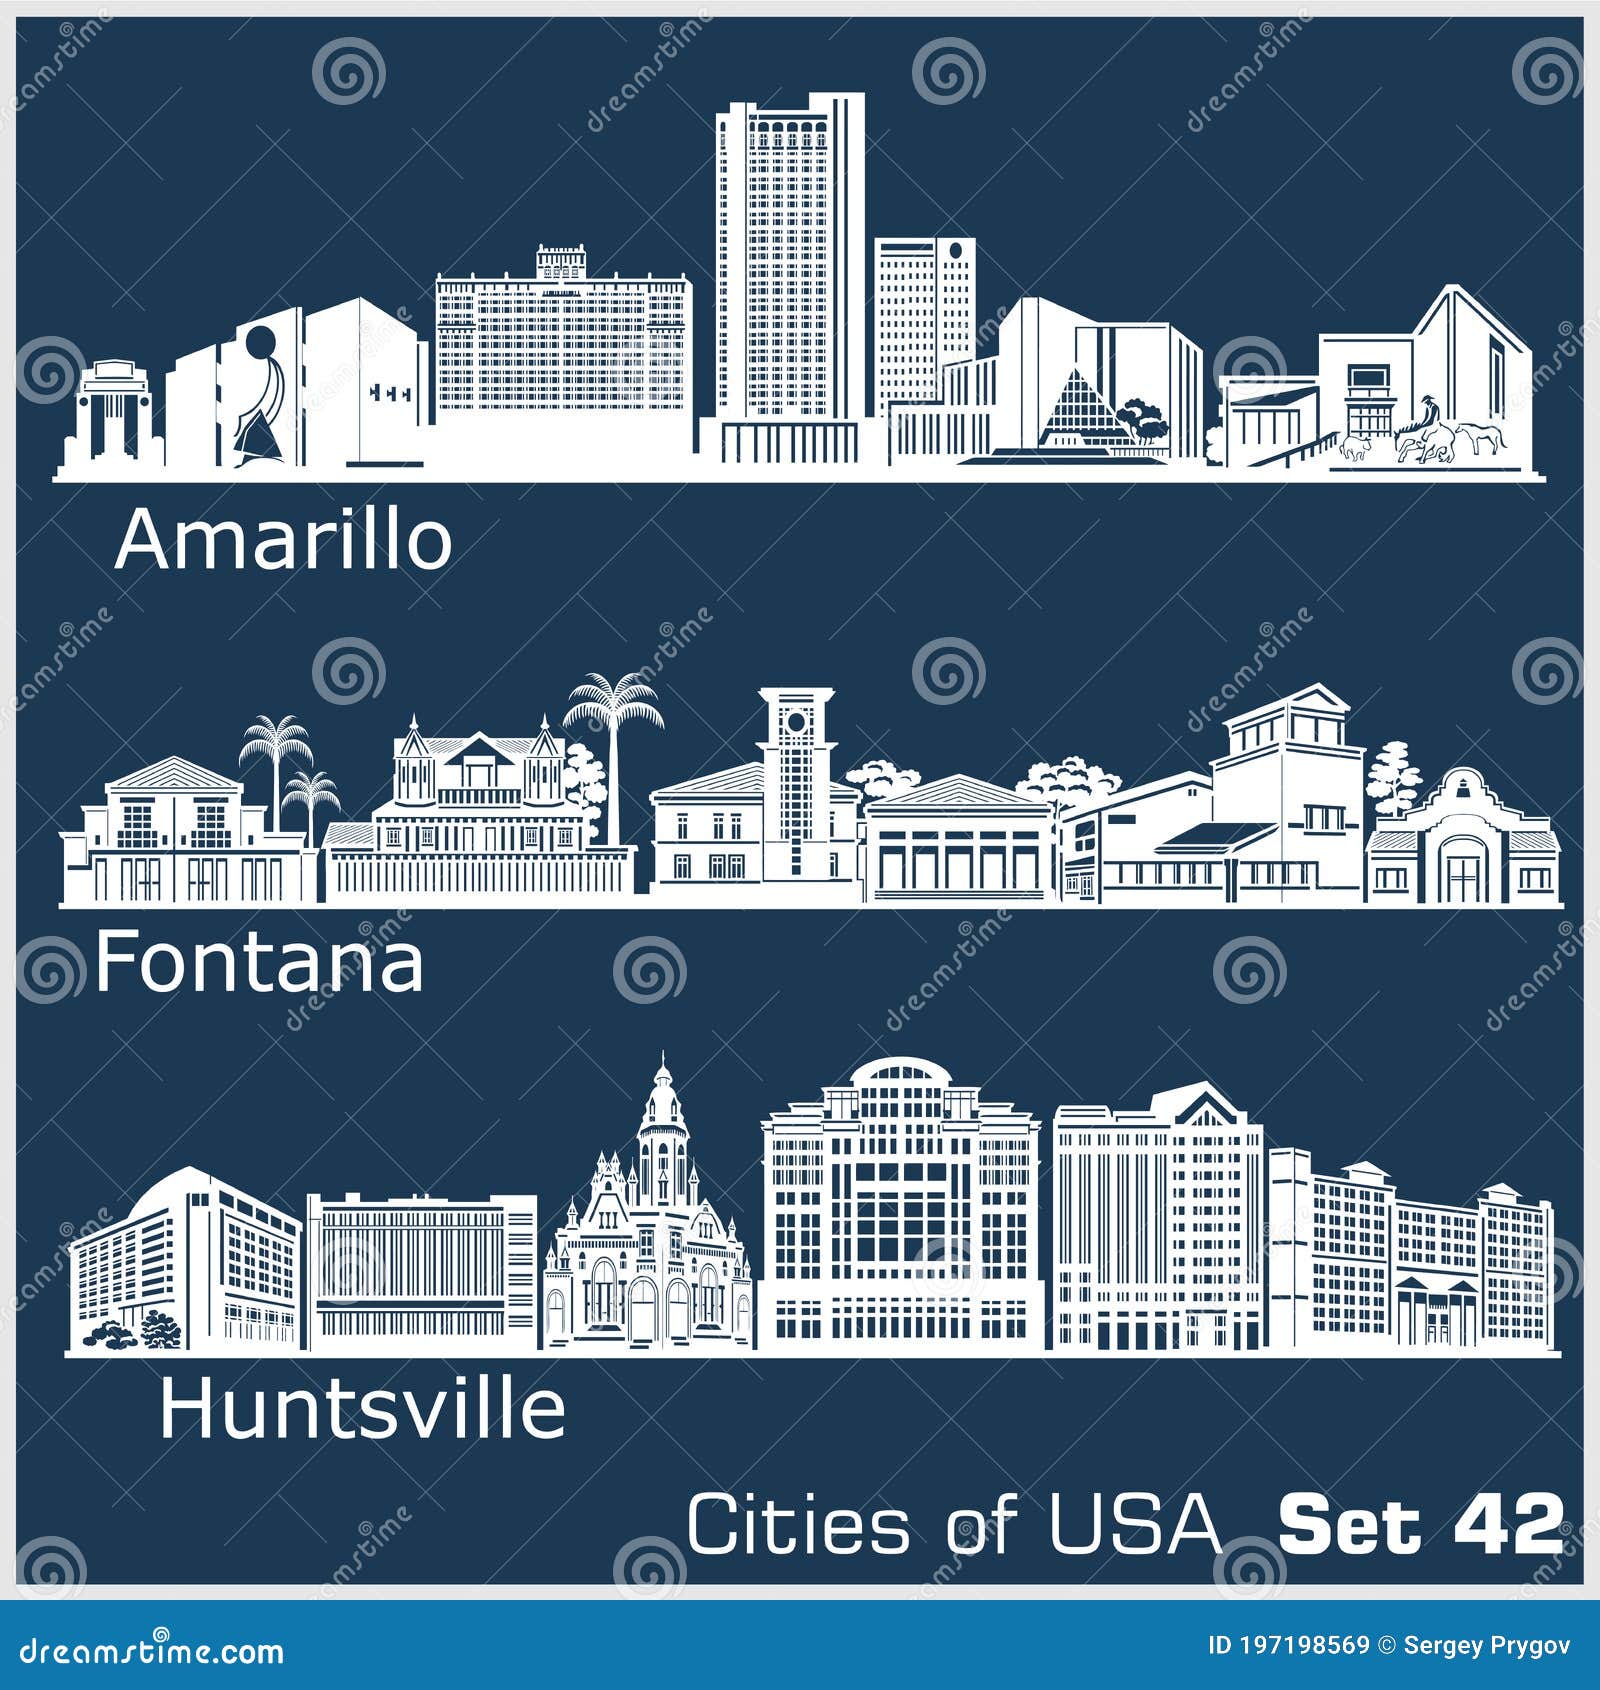 cities of usa - fontana, amarillo, huntsville. detailed architecture. trendy  .